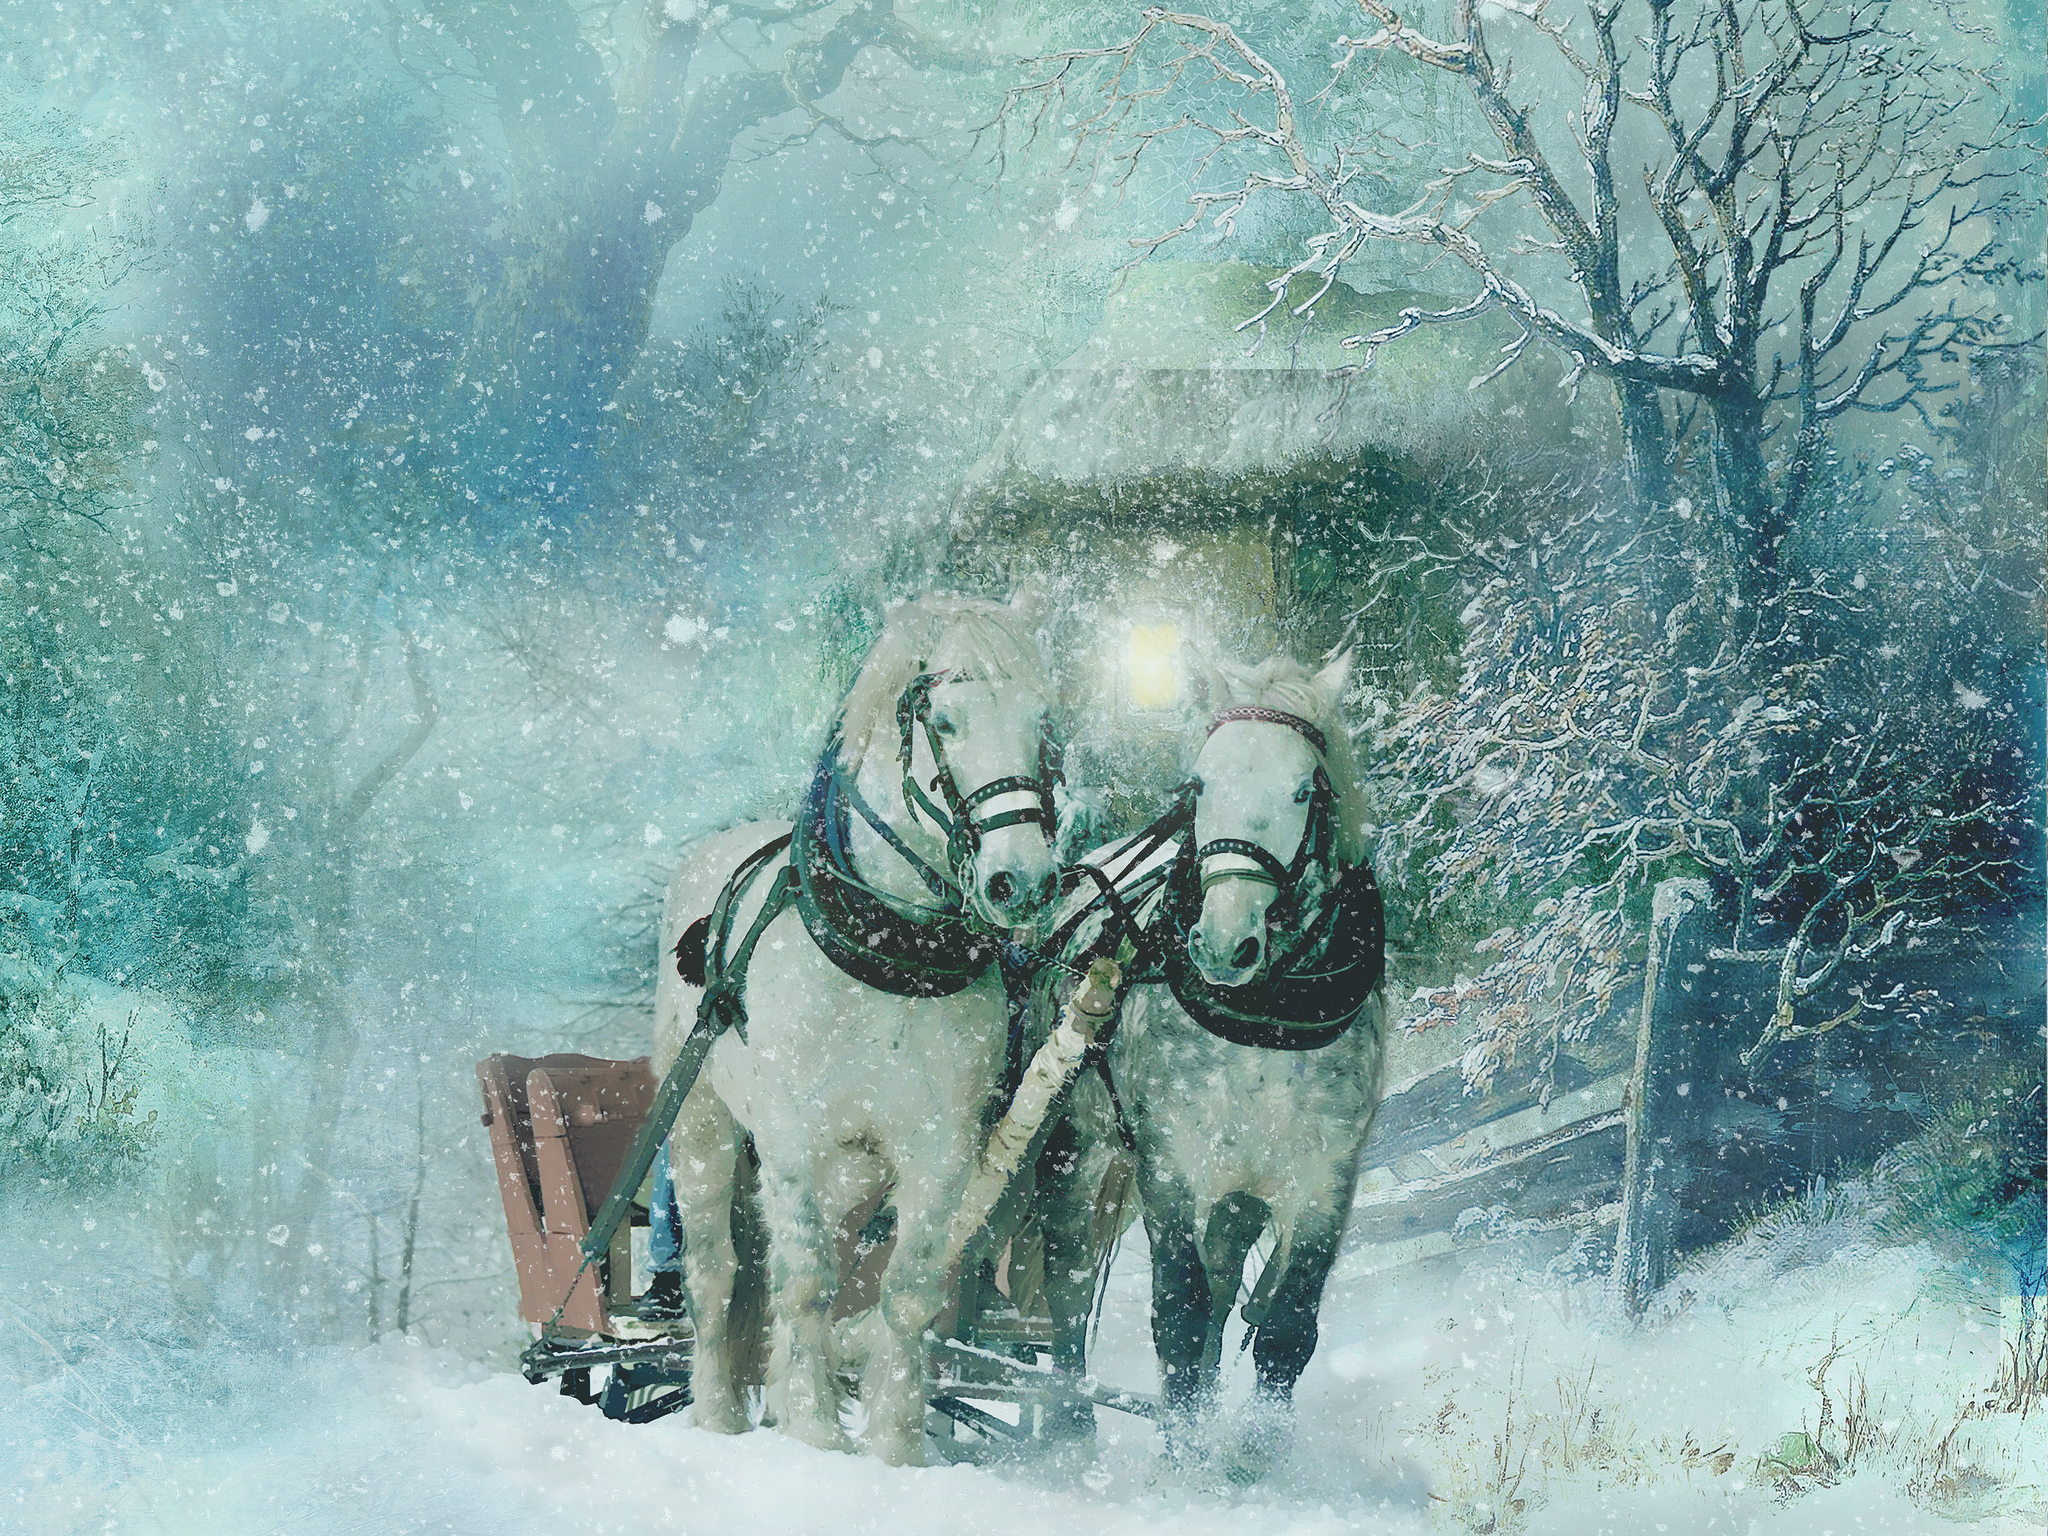 Horses Pulling Sleigh in Snowstorm by Birgitta Sjöstedt